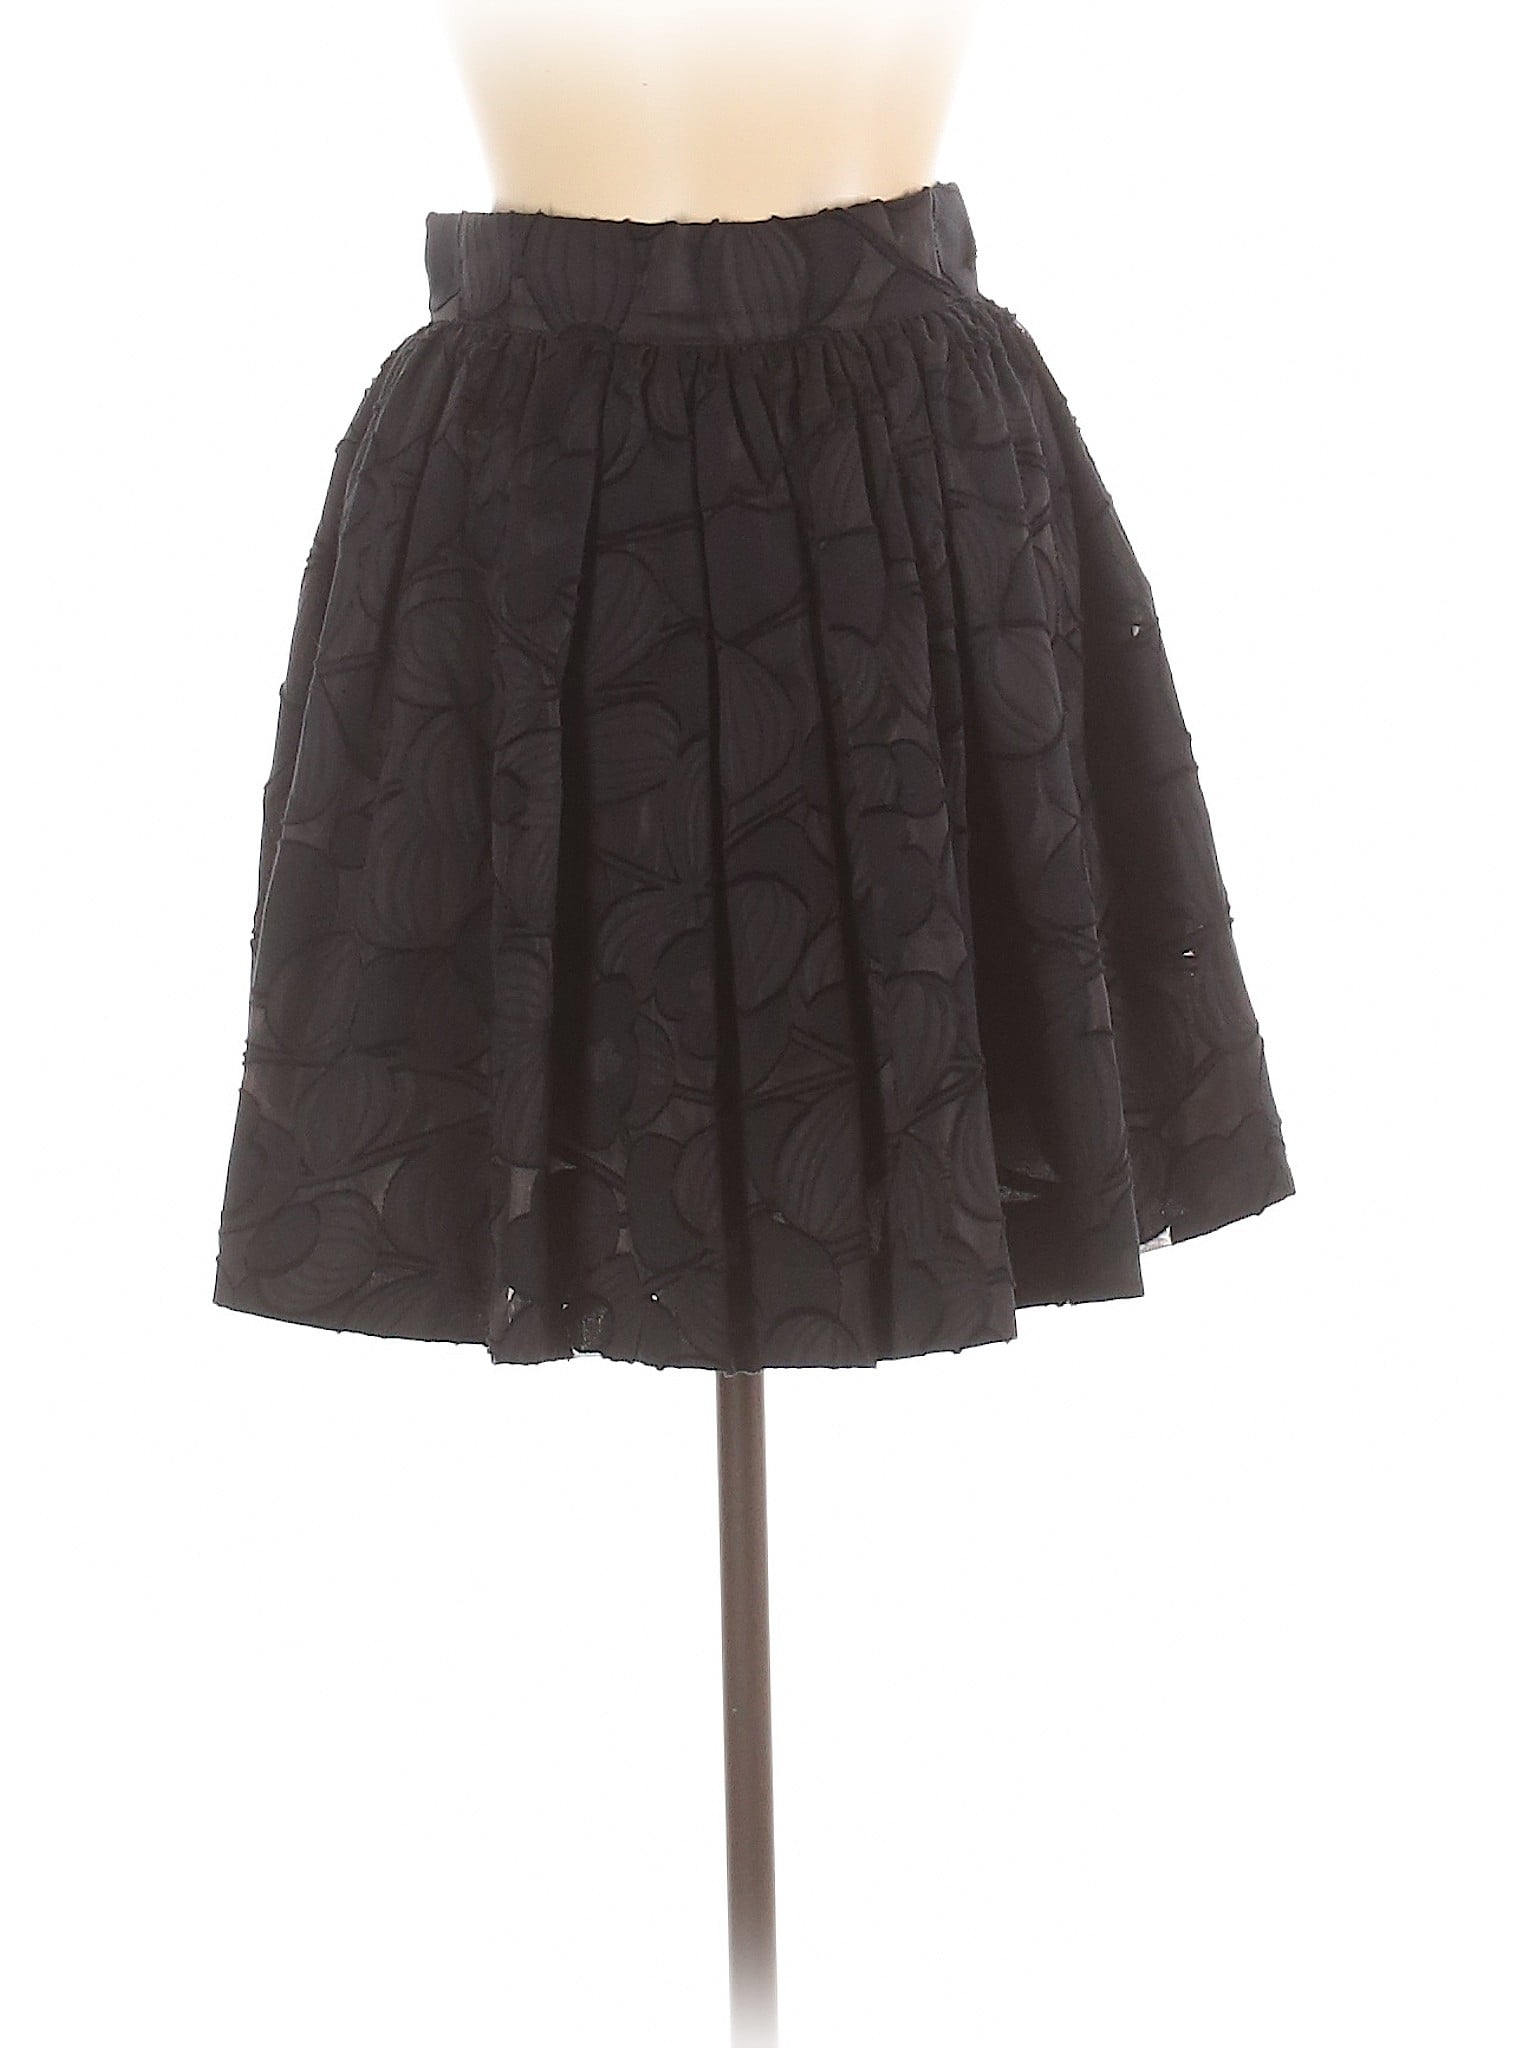 Jill Stuart - Pre-Owned Jill Stuart Women's Size M Formal Skirt ...